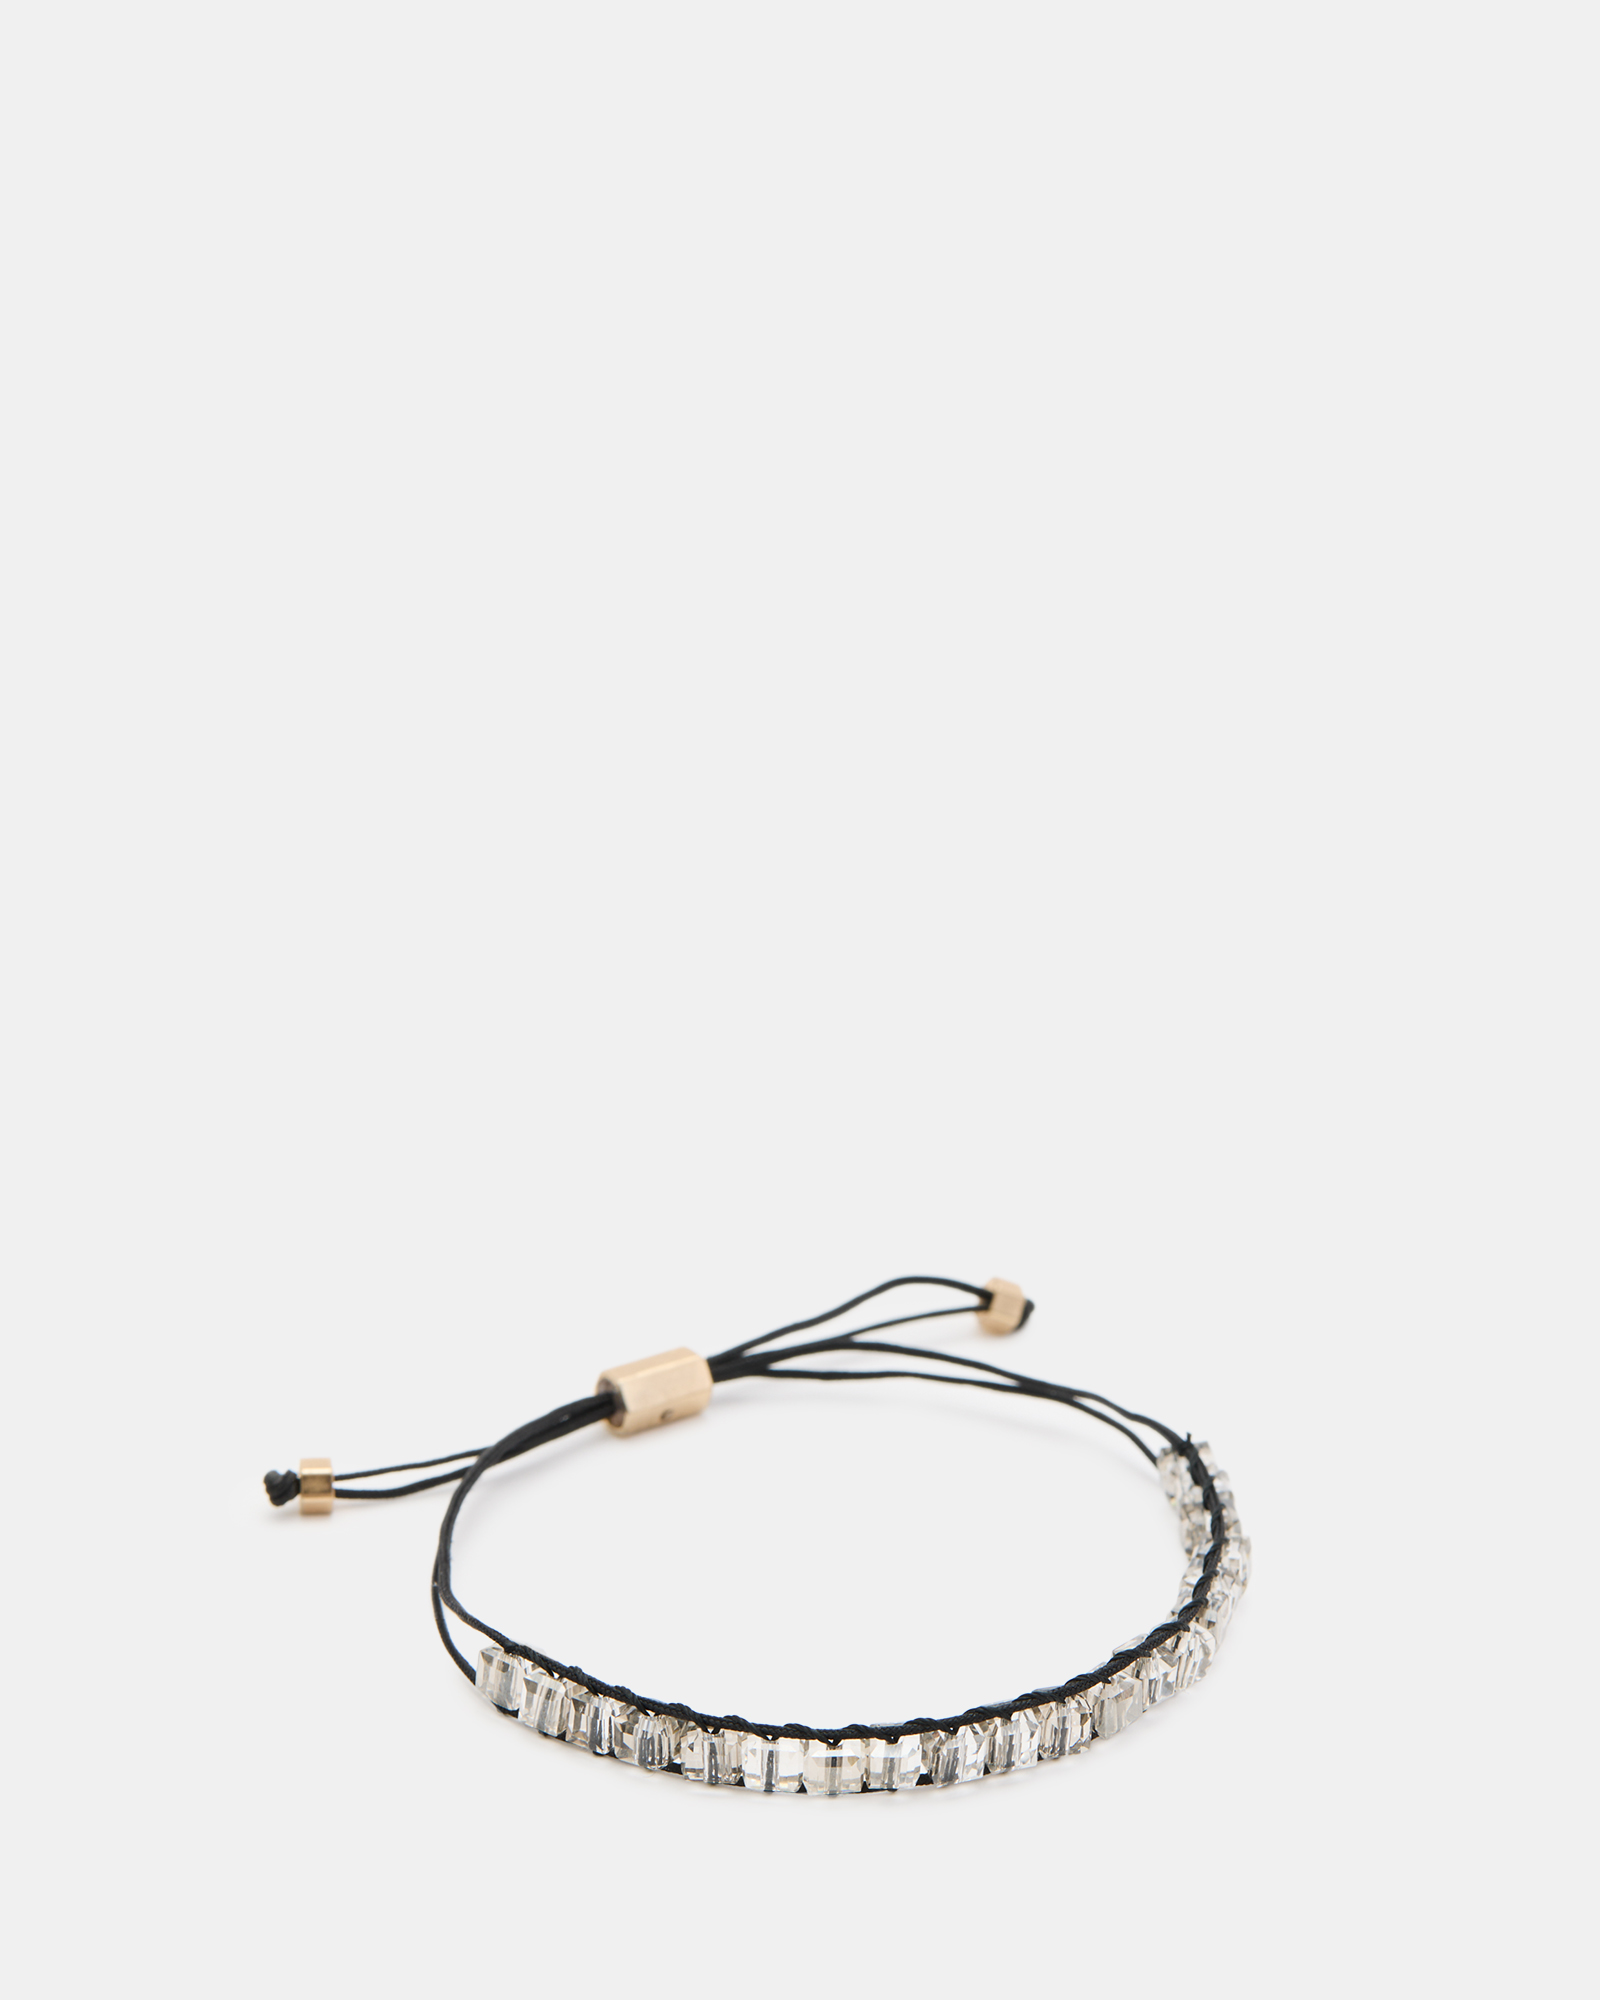 AllSaints Briana Adjustable Beaded Bracelet,, GREY/BLK/WRM BRASS, Size: One Size